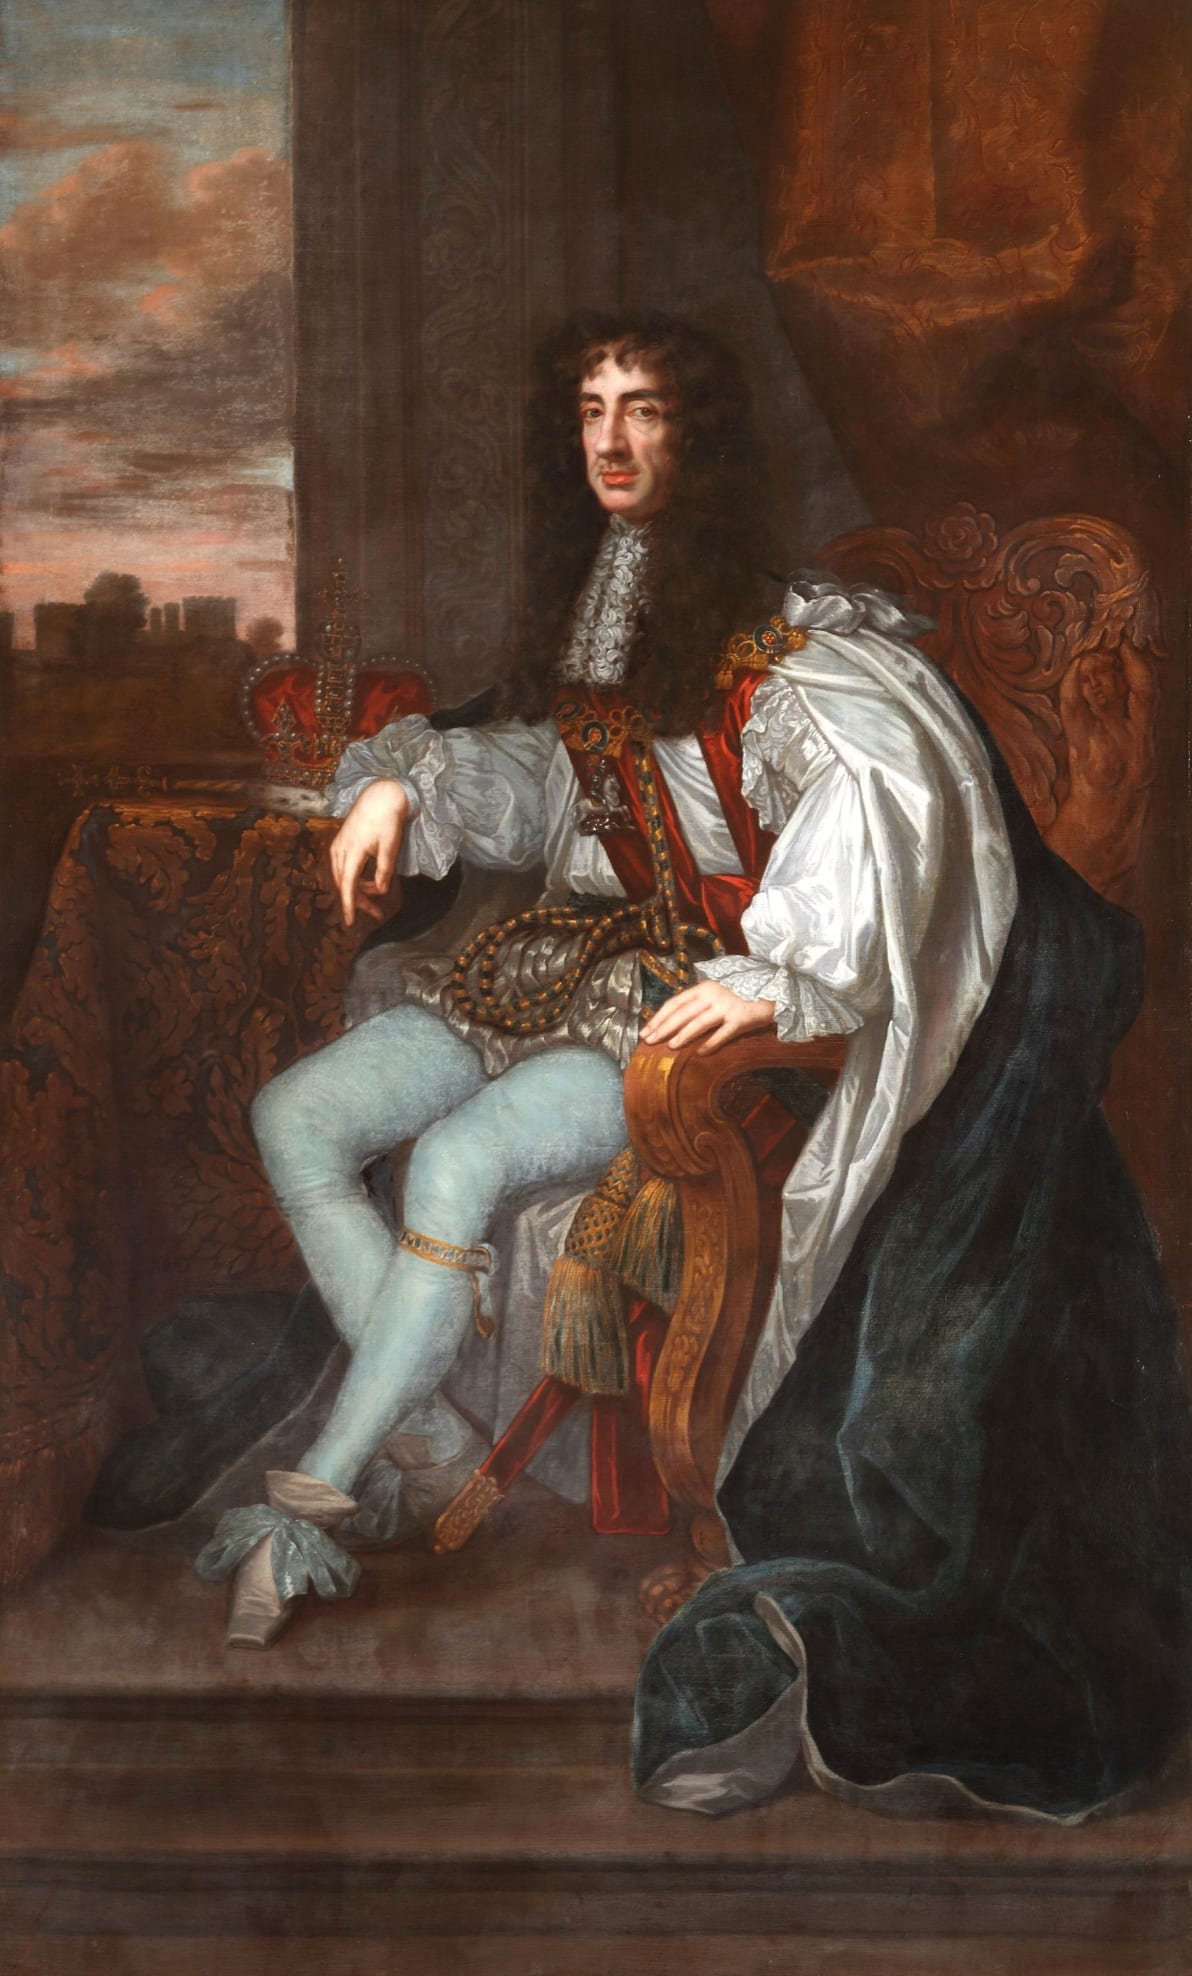 Painting of King Charles II